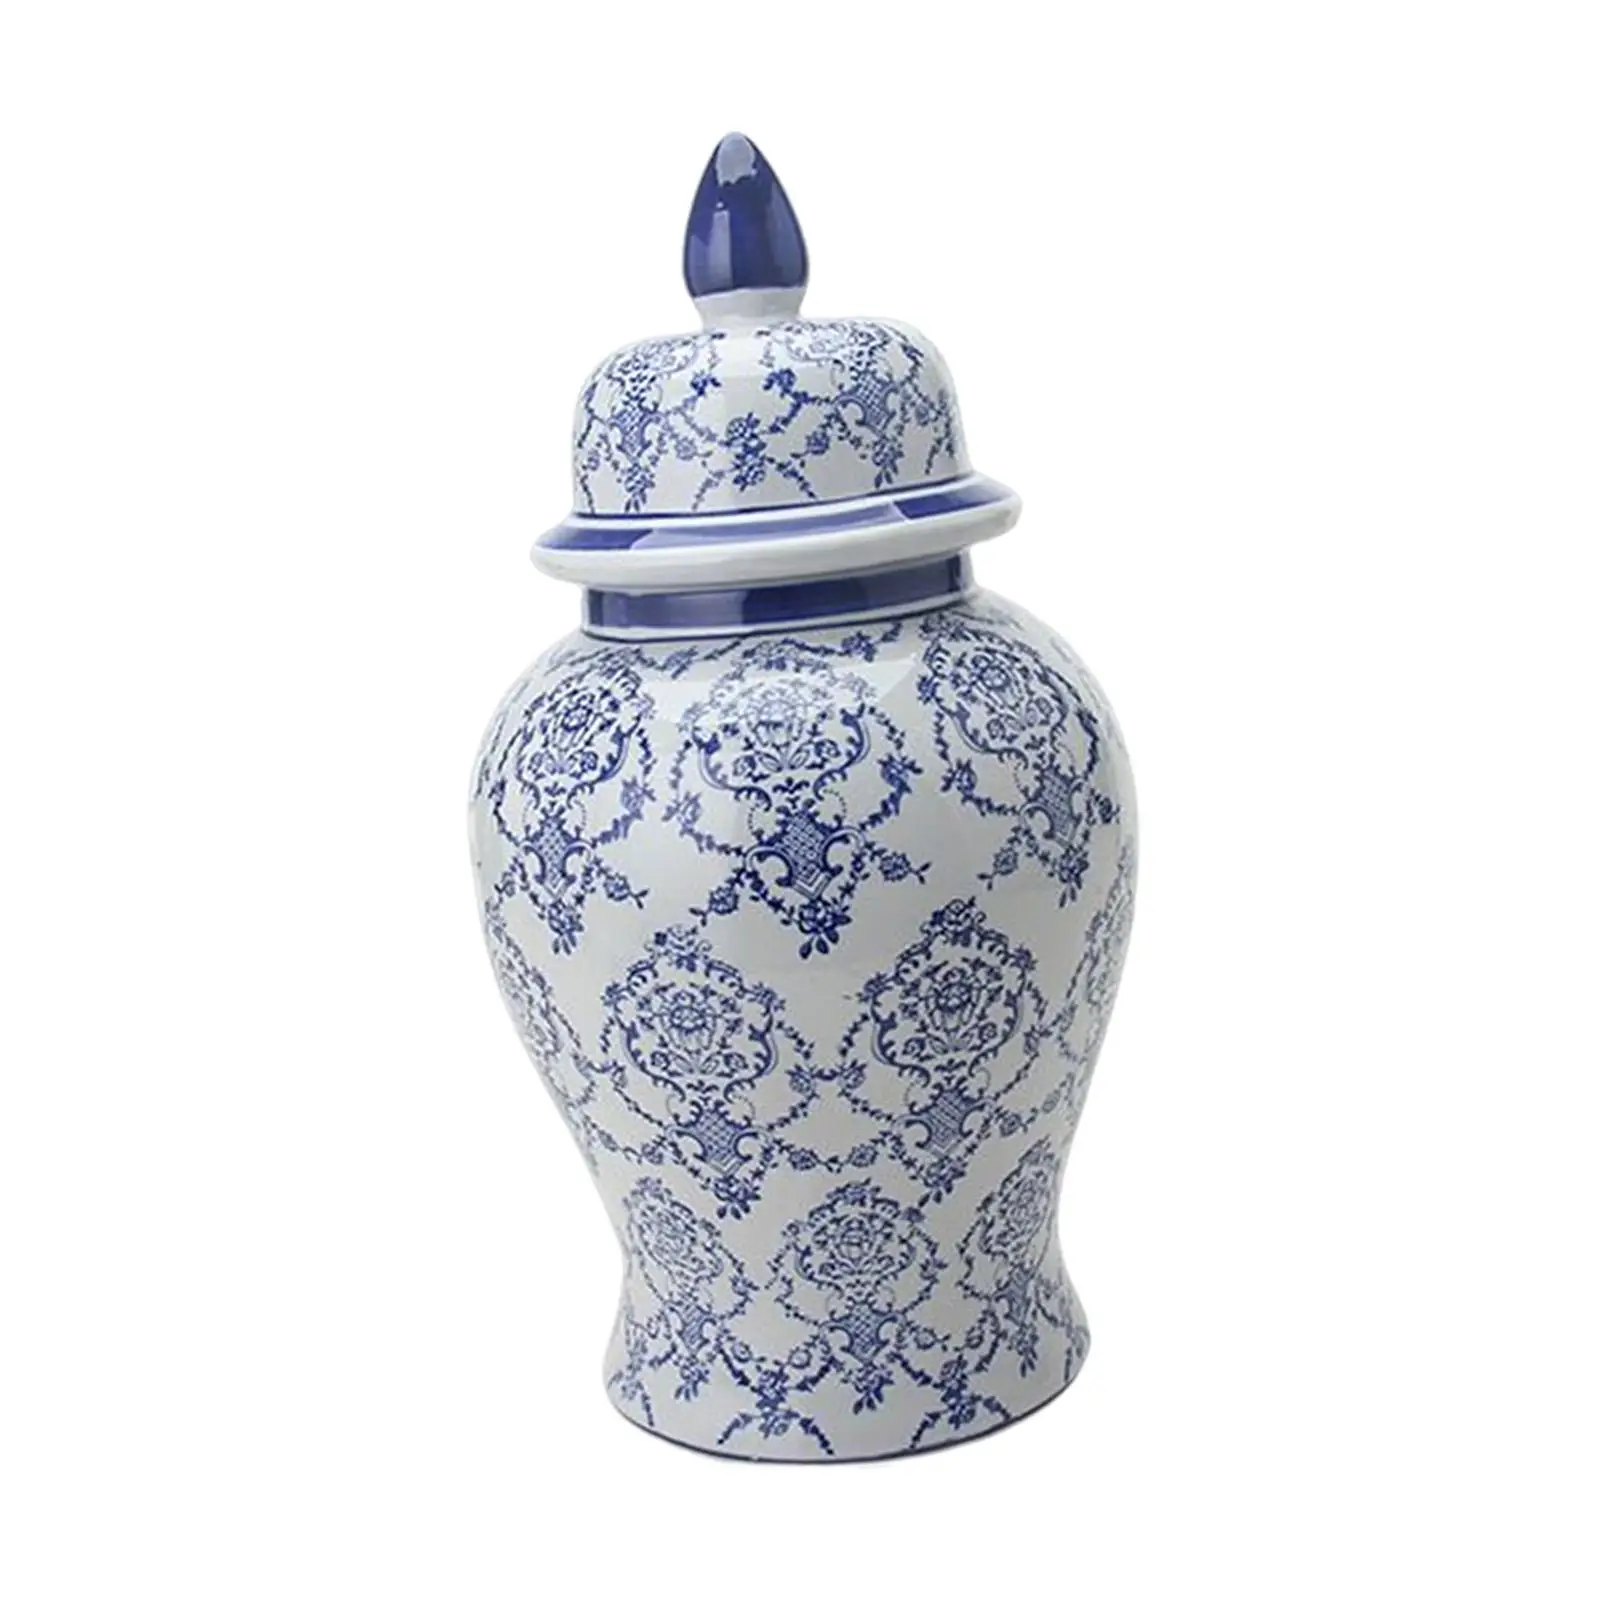 Blue and White Porcelain Ginger Jar Ancient Chinese Temple Jar with Lid Floral Arrangement Desktop Tea Canister